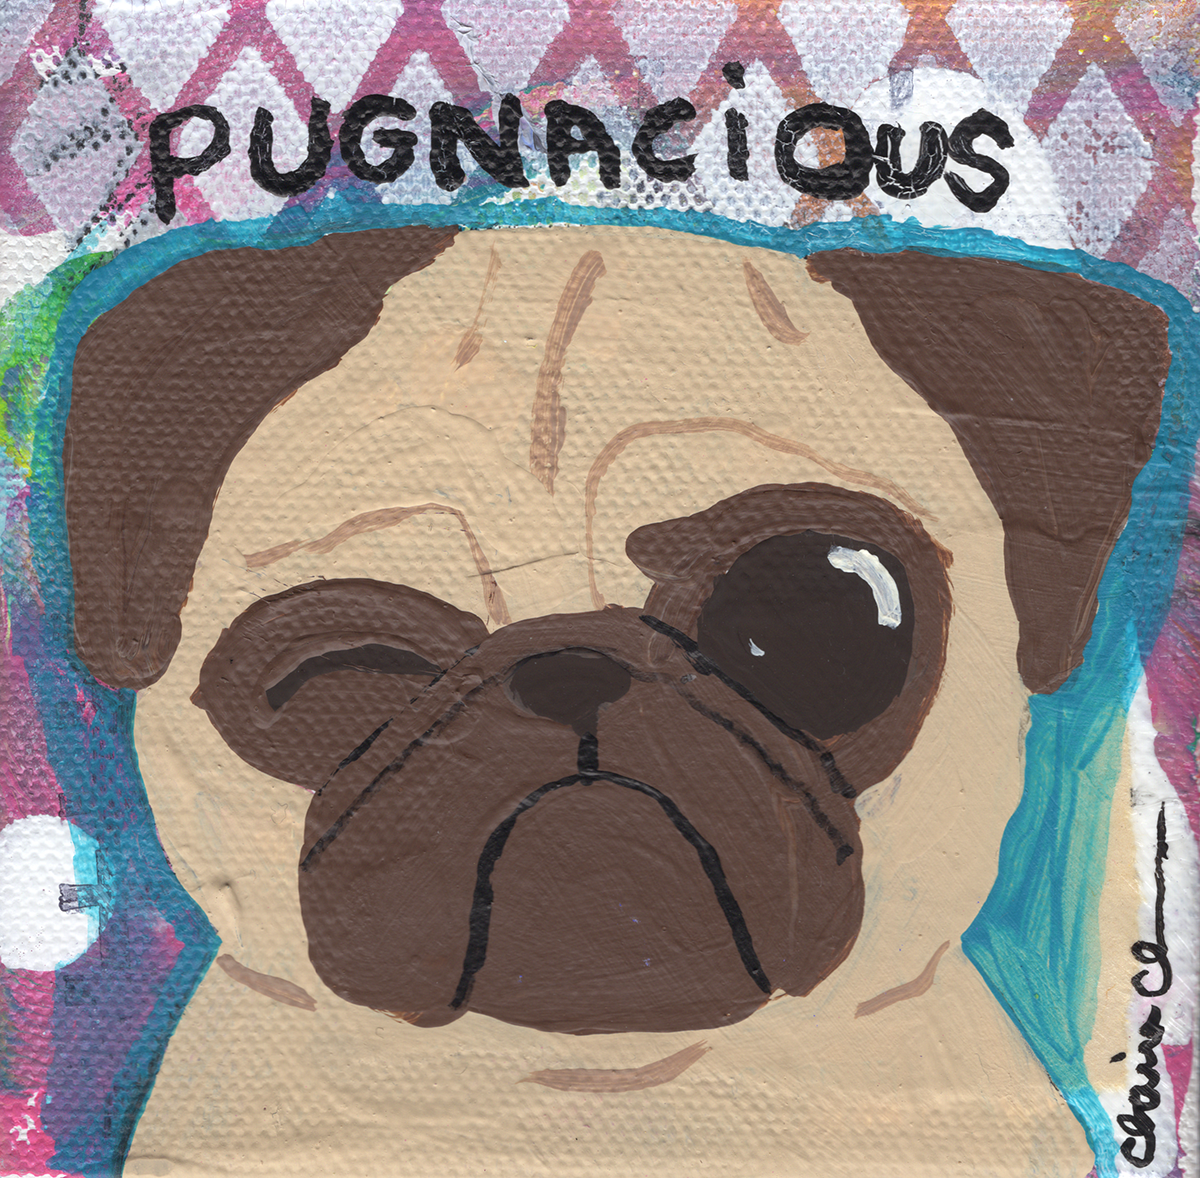 Pugnacious - Art Treats #184